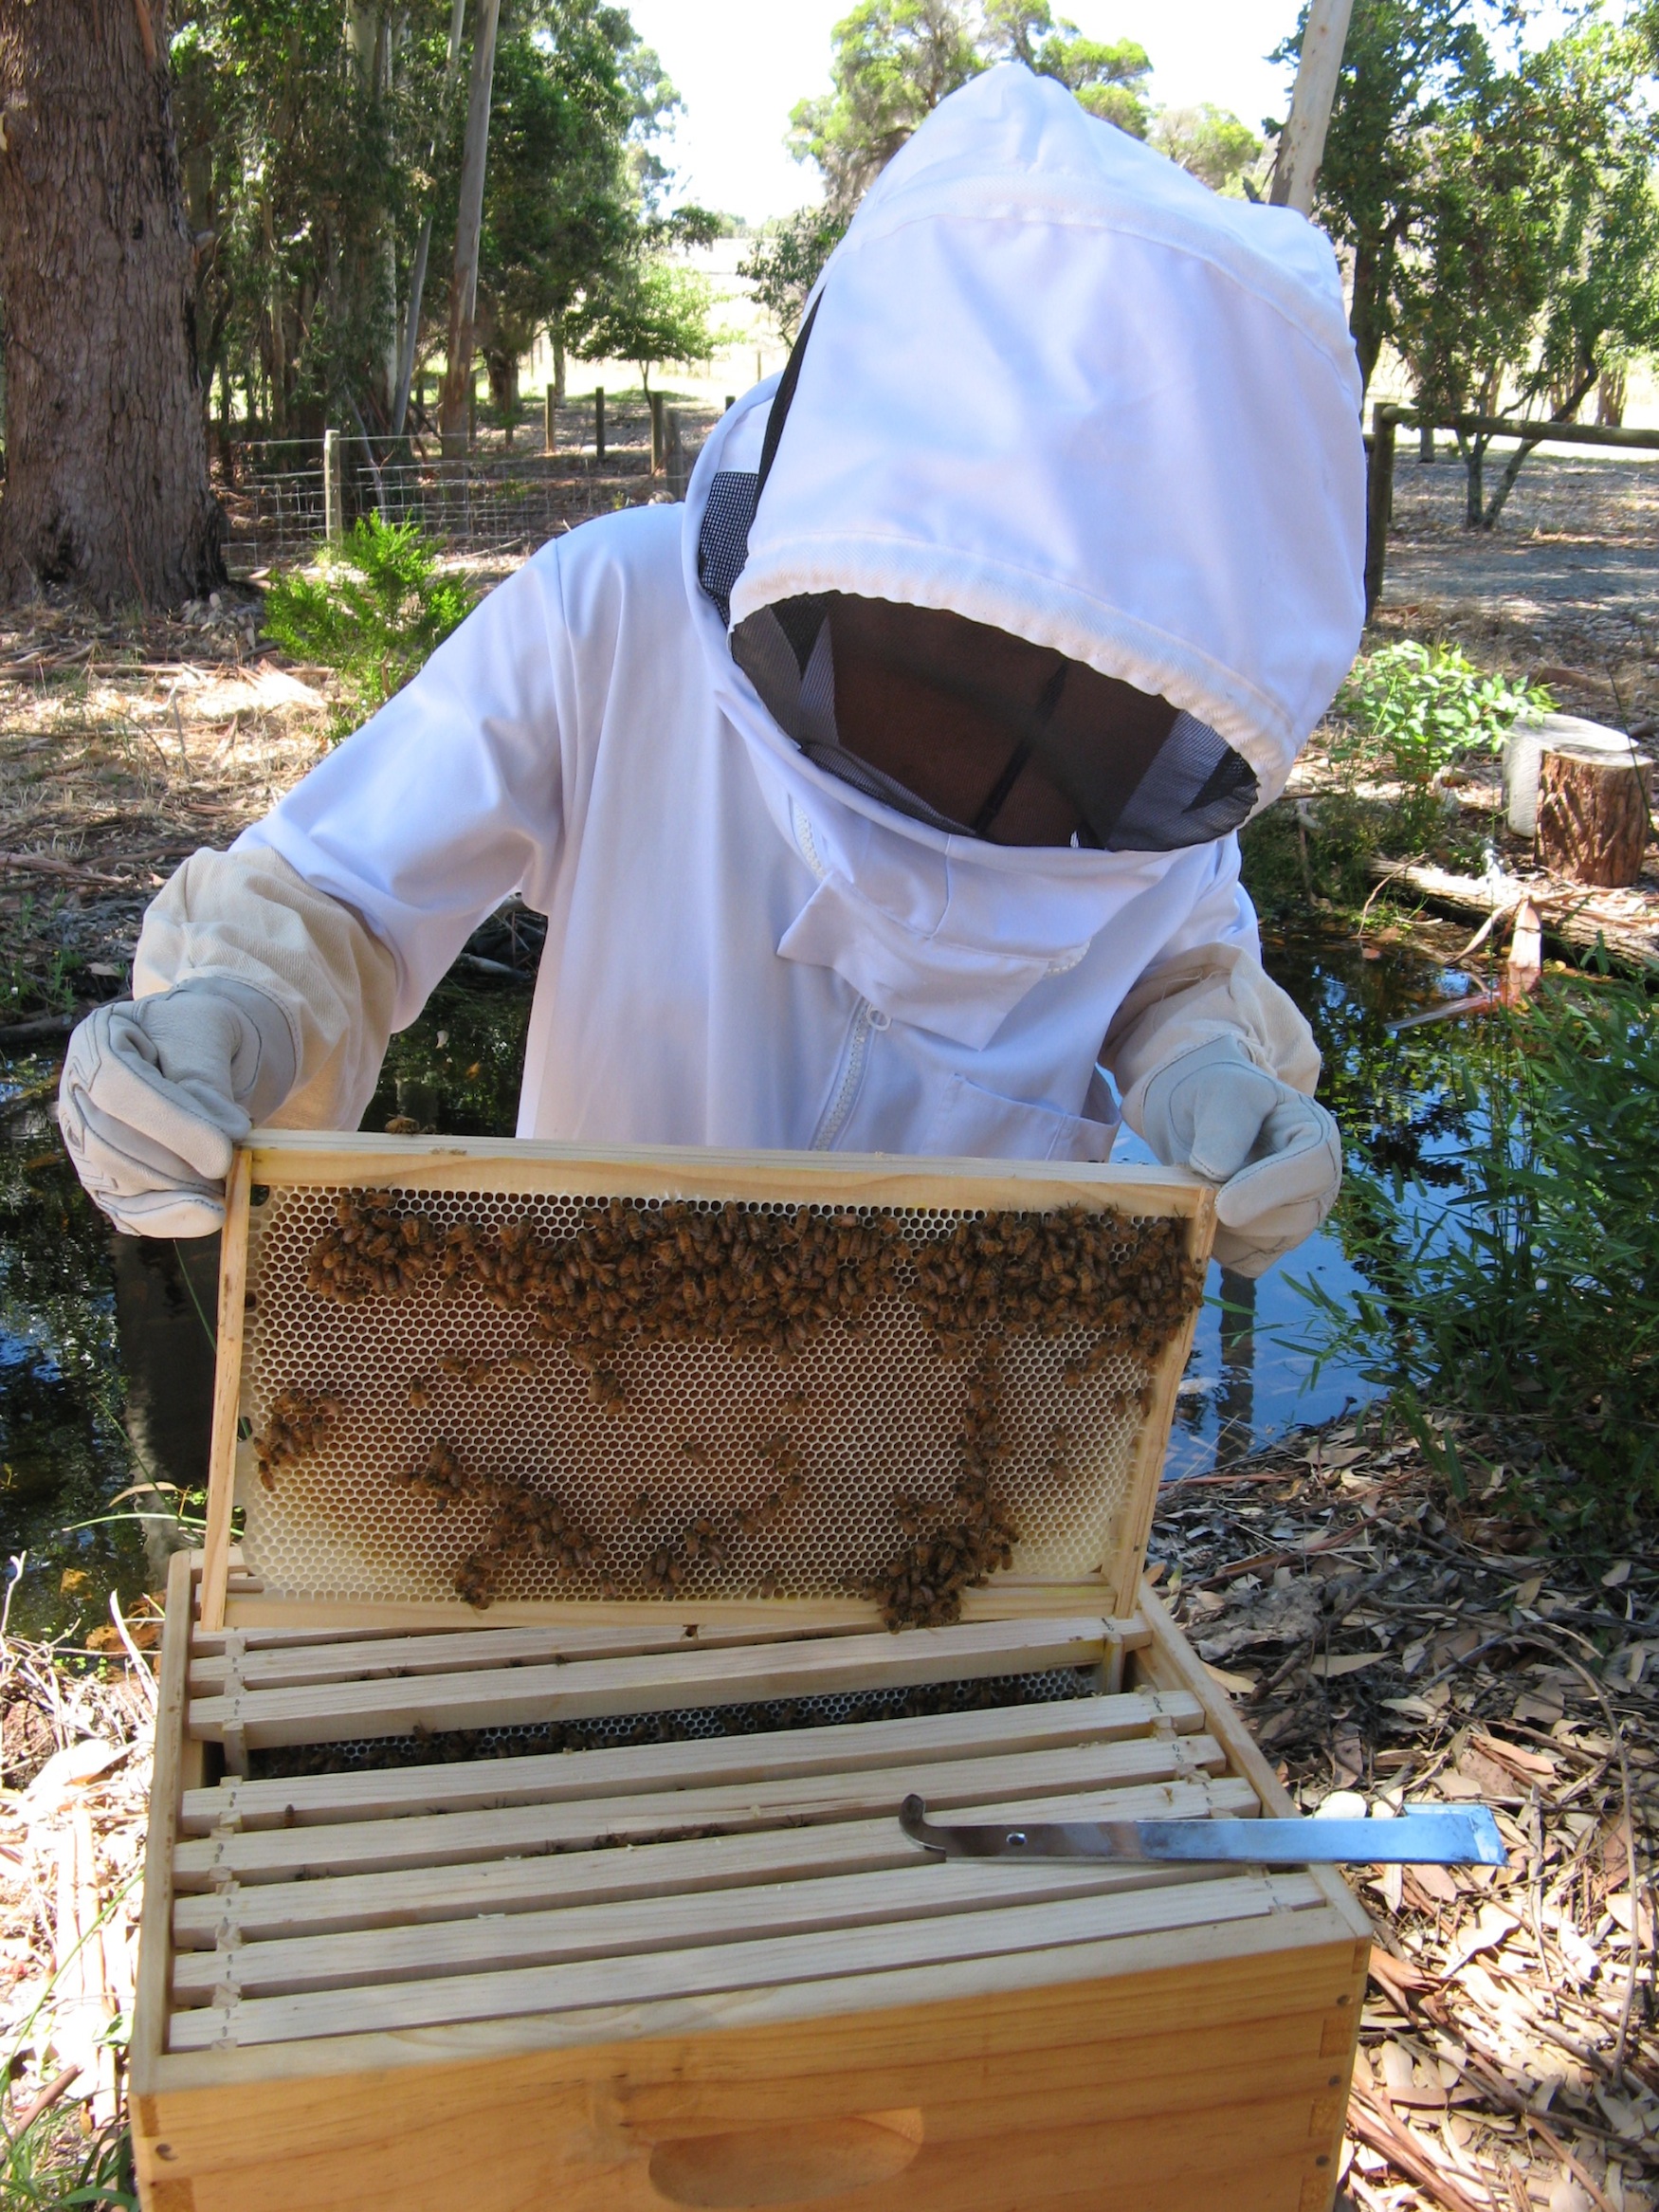 Honey production well underway!